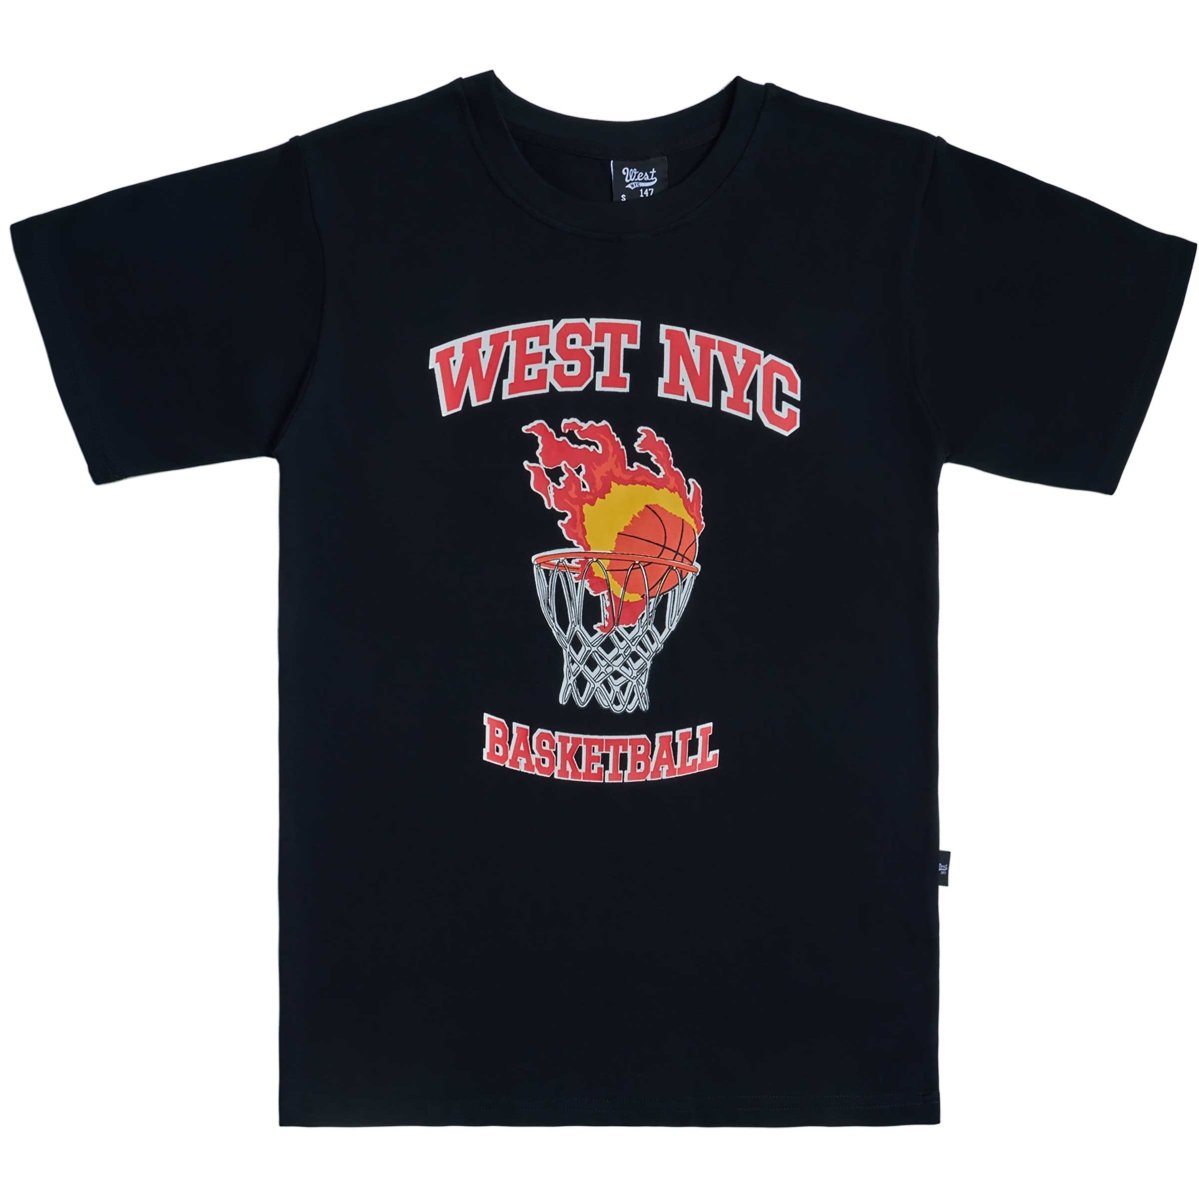 West NYC Basketball Tee Shirt Black - 10044149 - West NYC